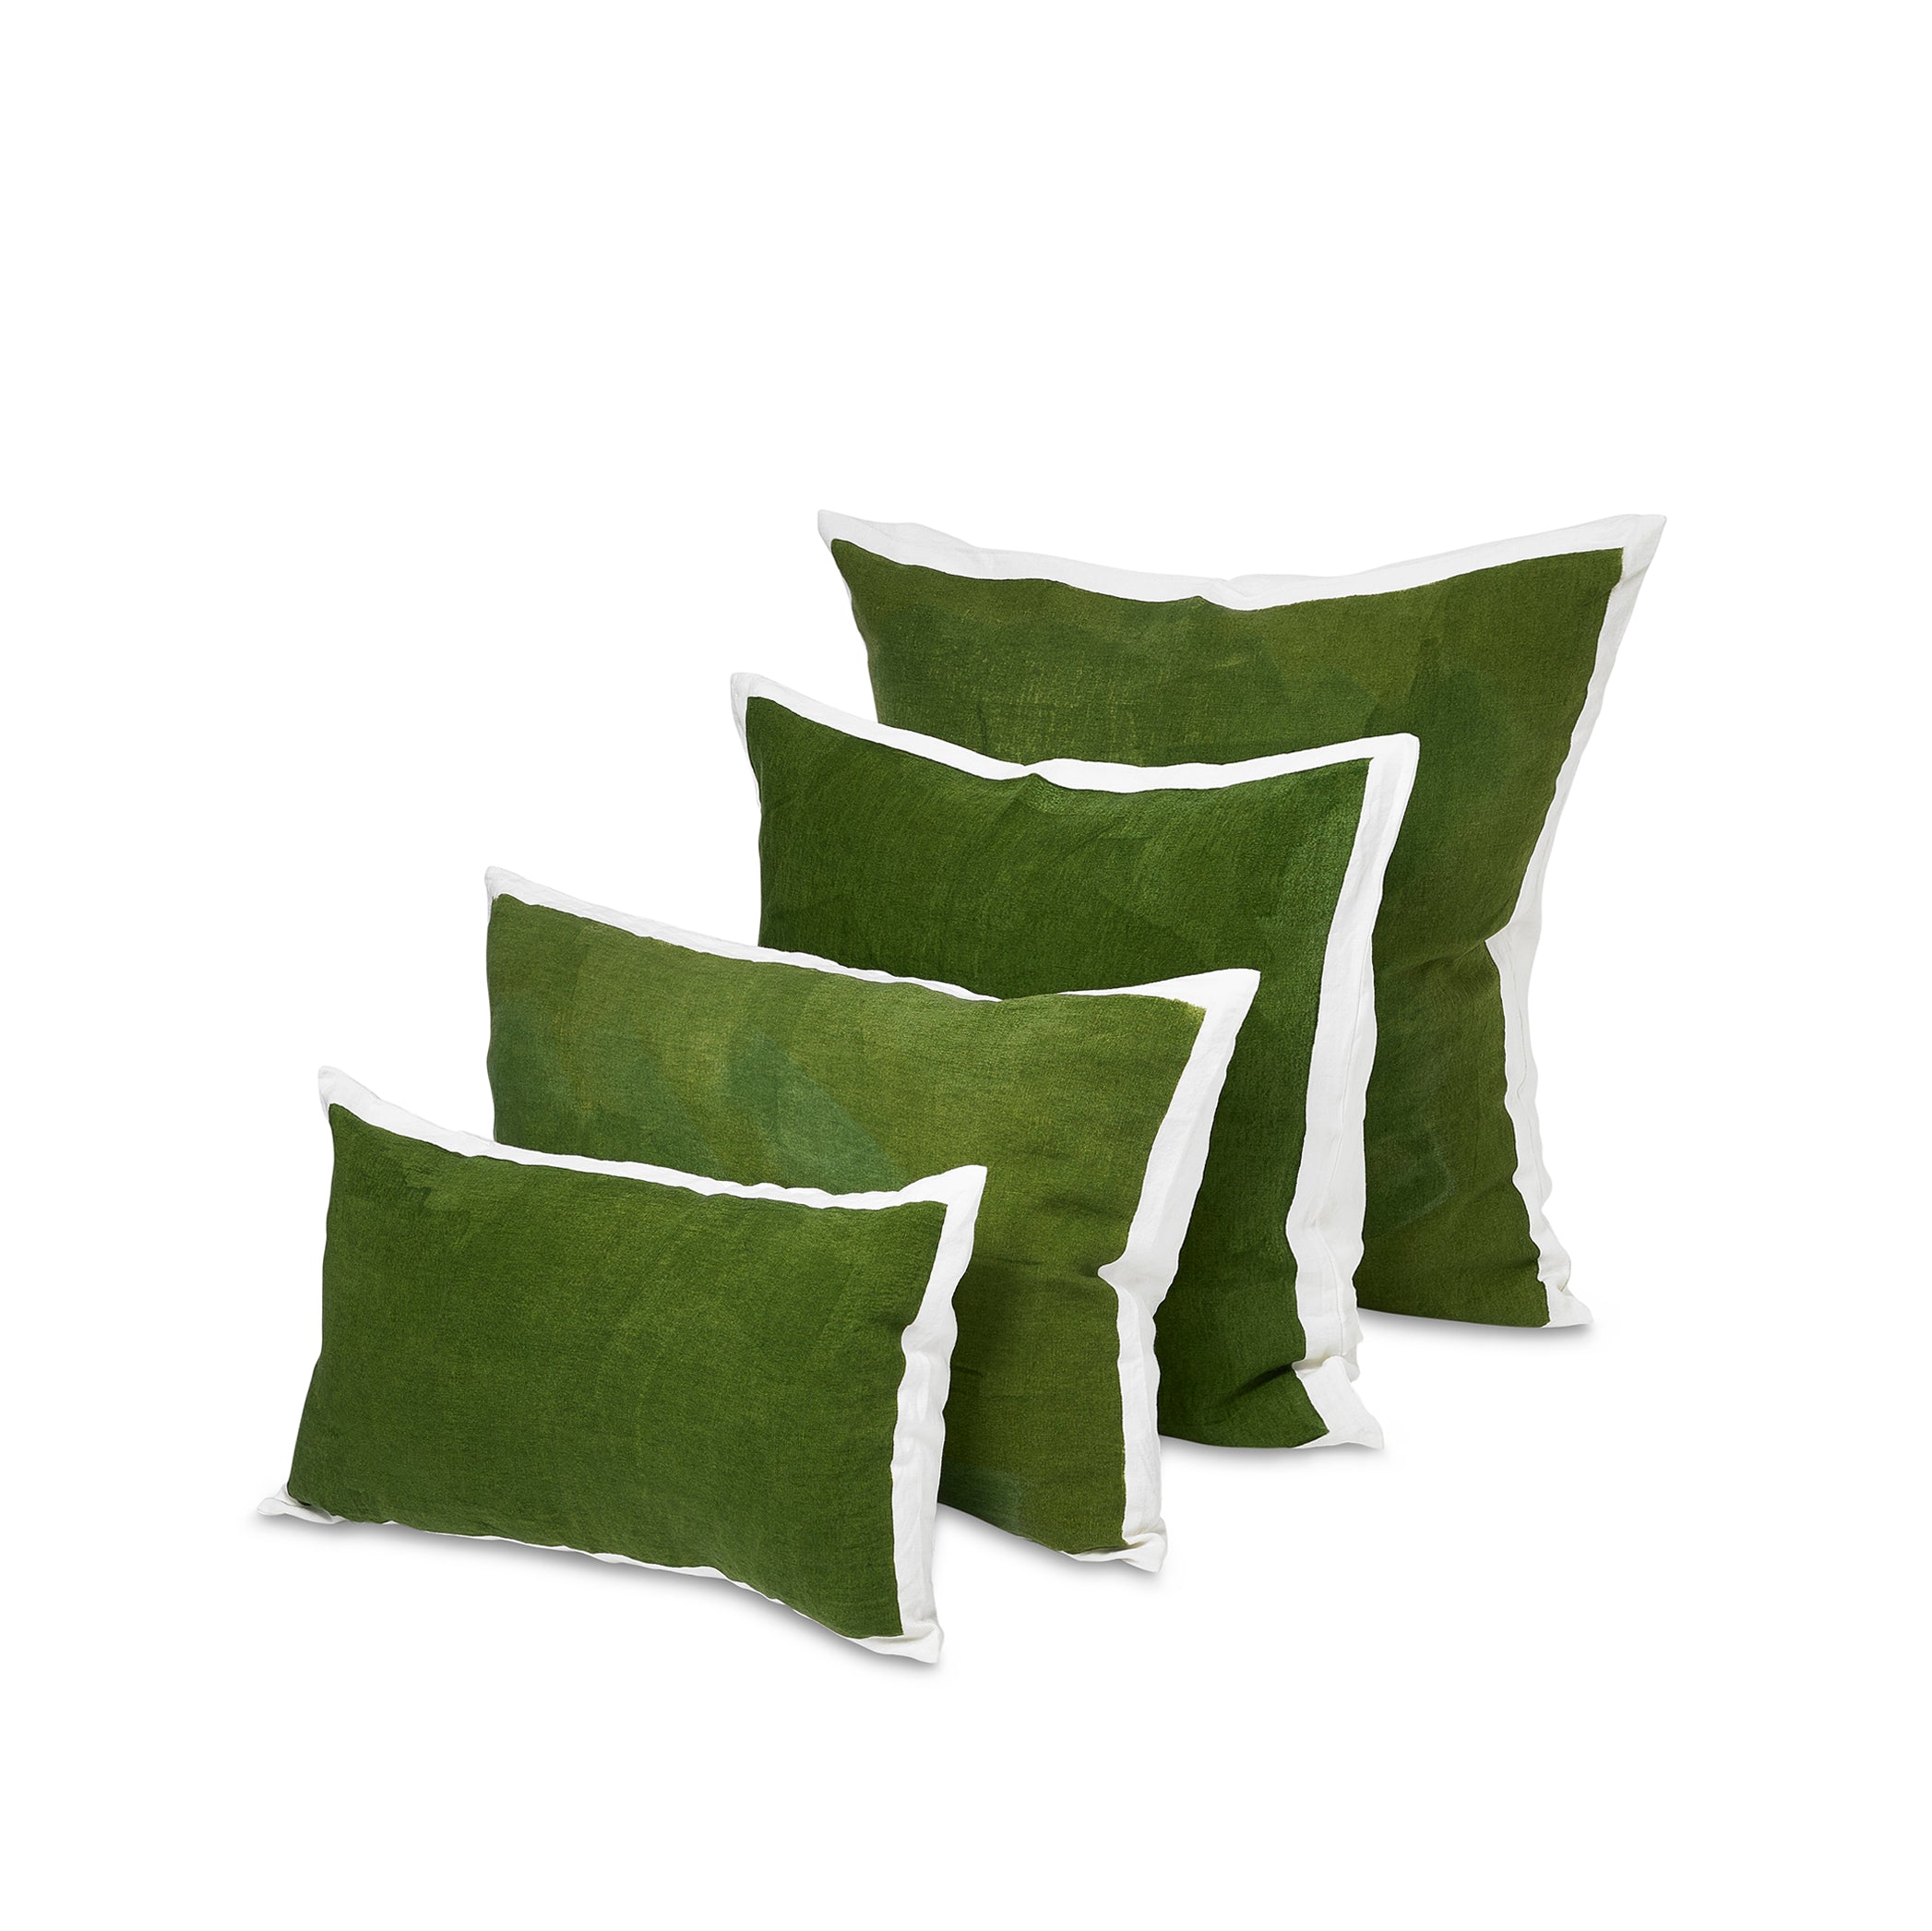 Hand Painted Linen Cushion in Avocado Green, 60cm x 40cm